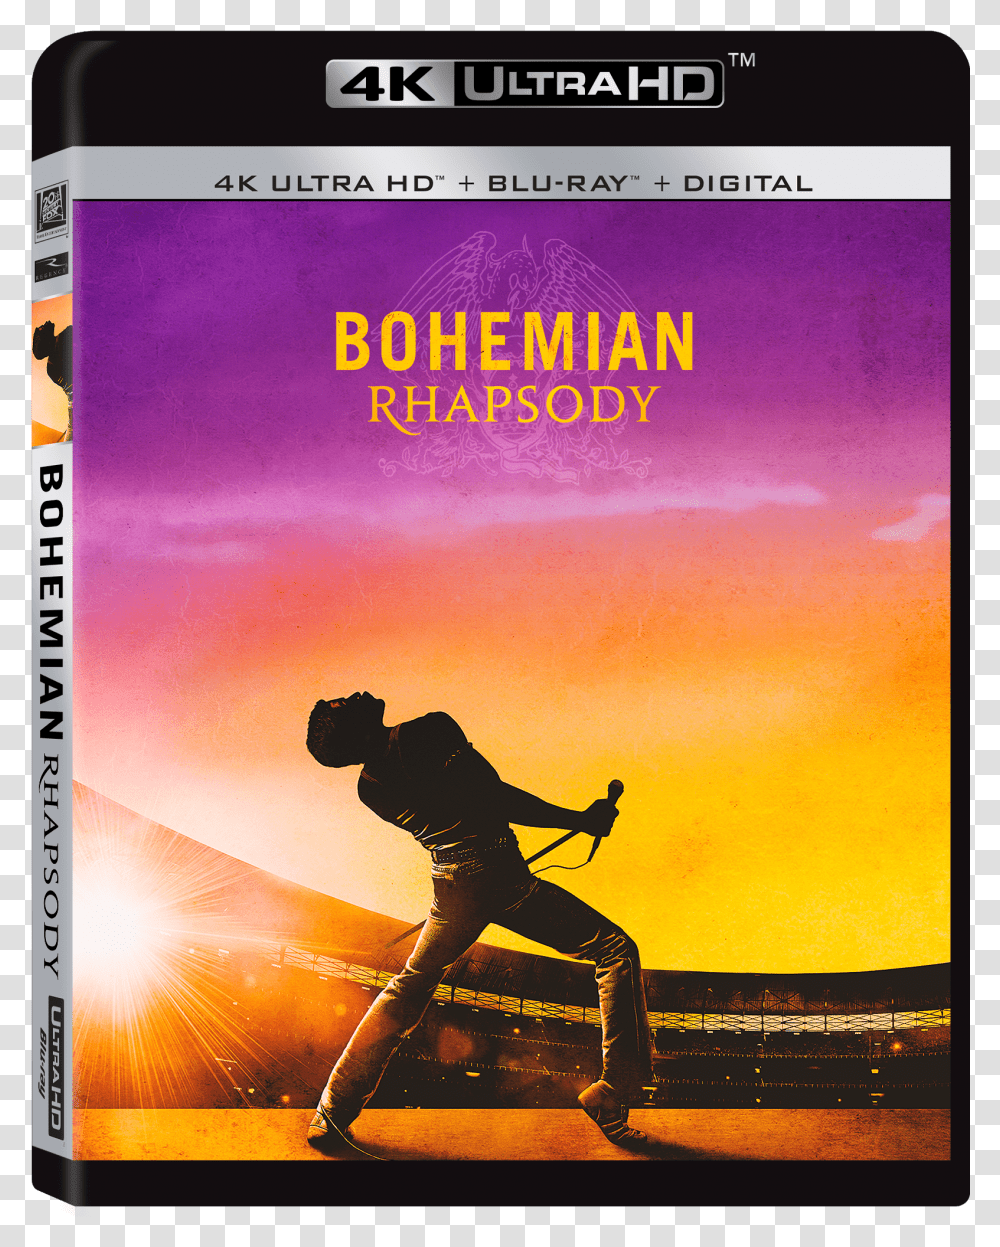 Bohemian Rhapsody 4k Ultra Hd Combo Pack Cover Bohemian Rhapsody 4k, Person, Human, Vehicle Transparent Png